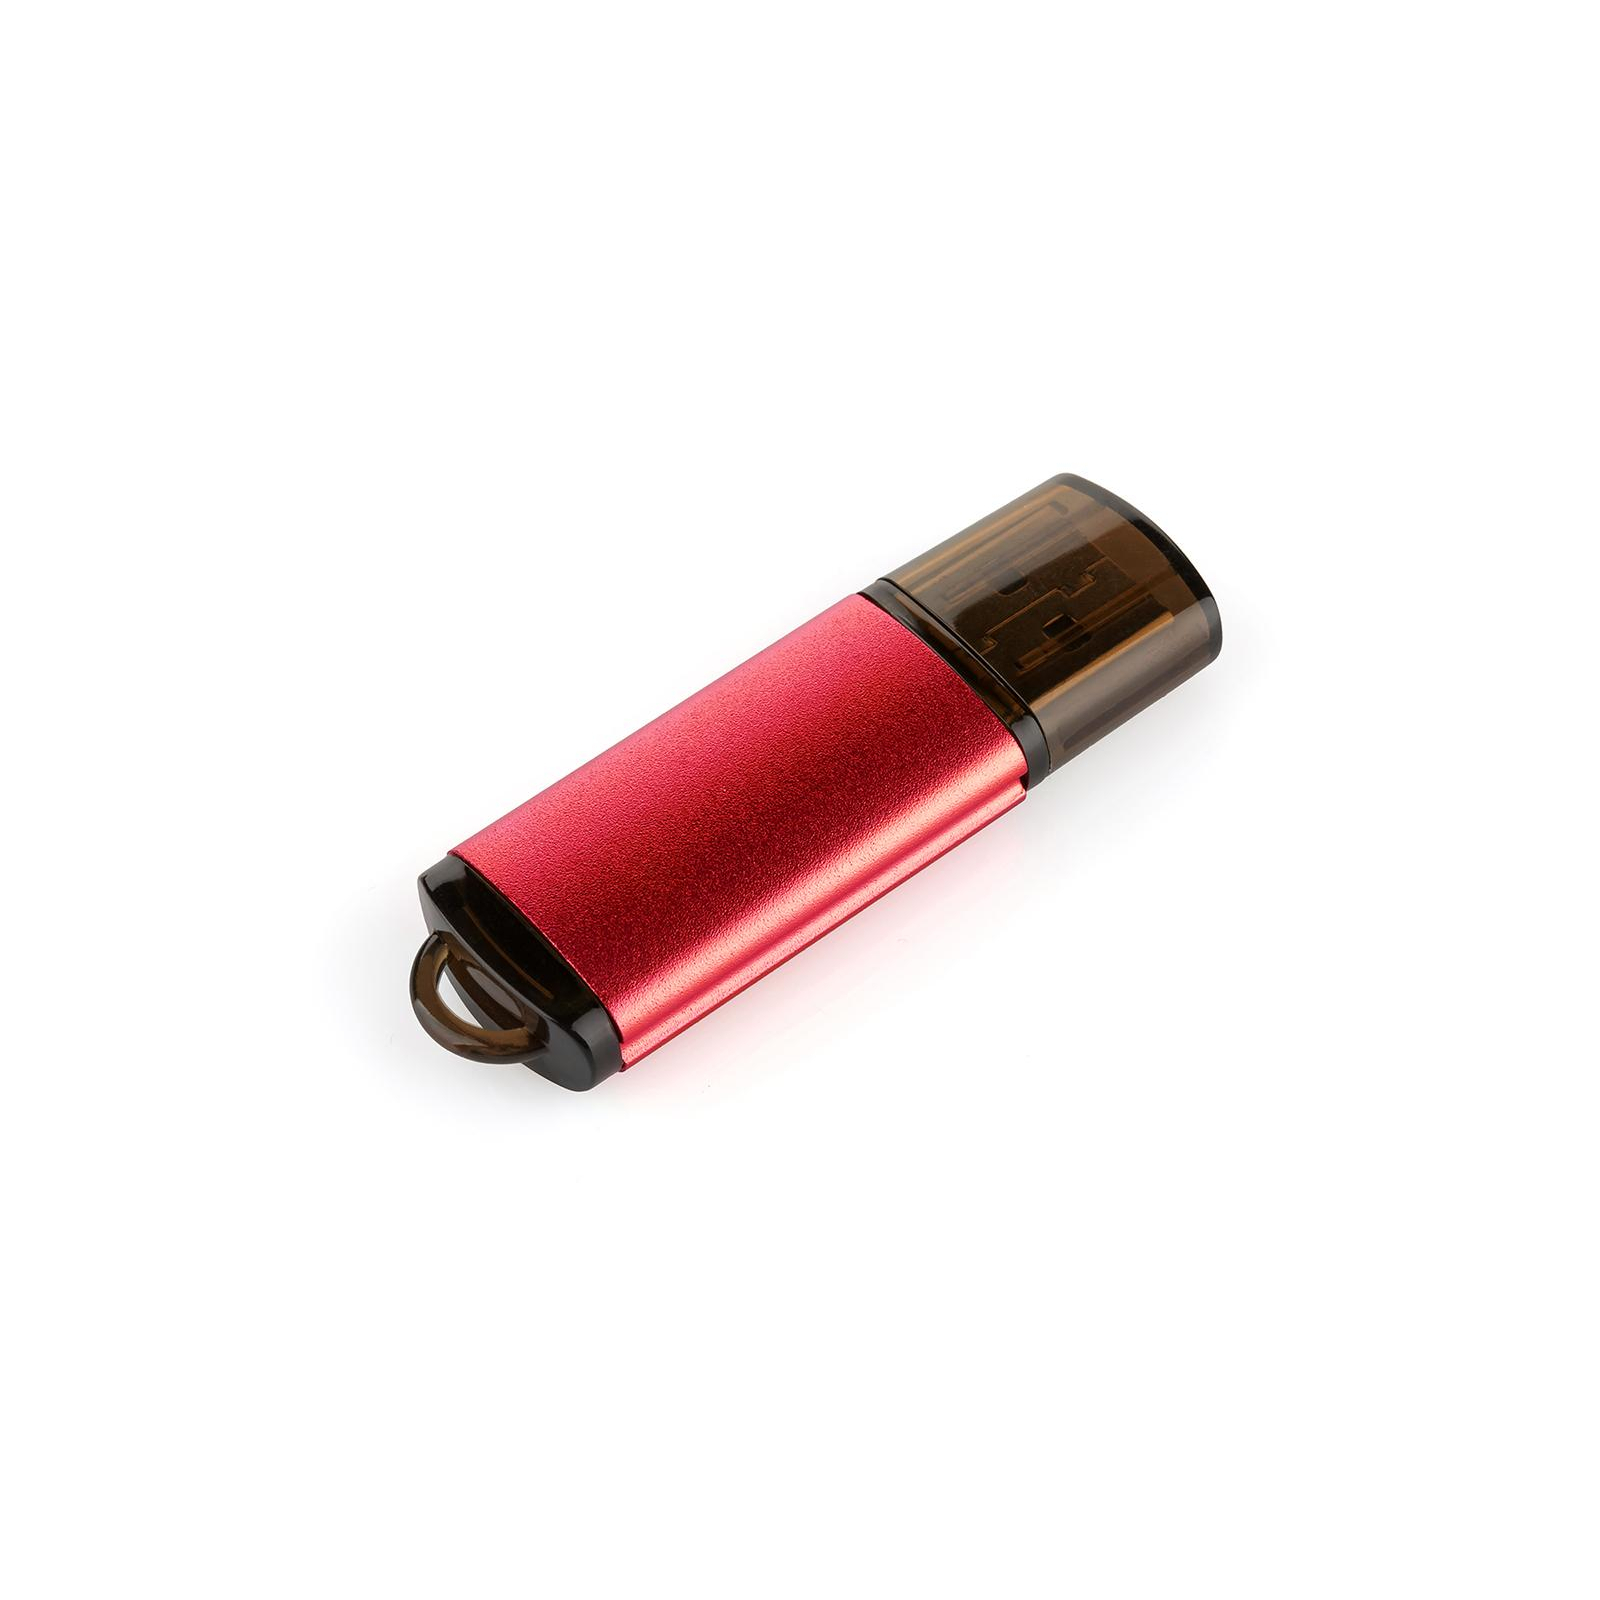 USB флеш накопитель eXceleram 16GB A3 Series Red USB 2.0 (EXA3U2RE16) изображение 2